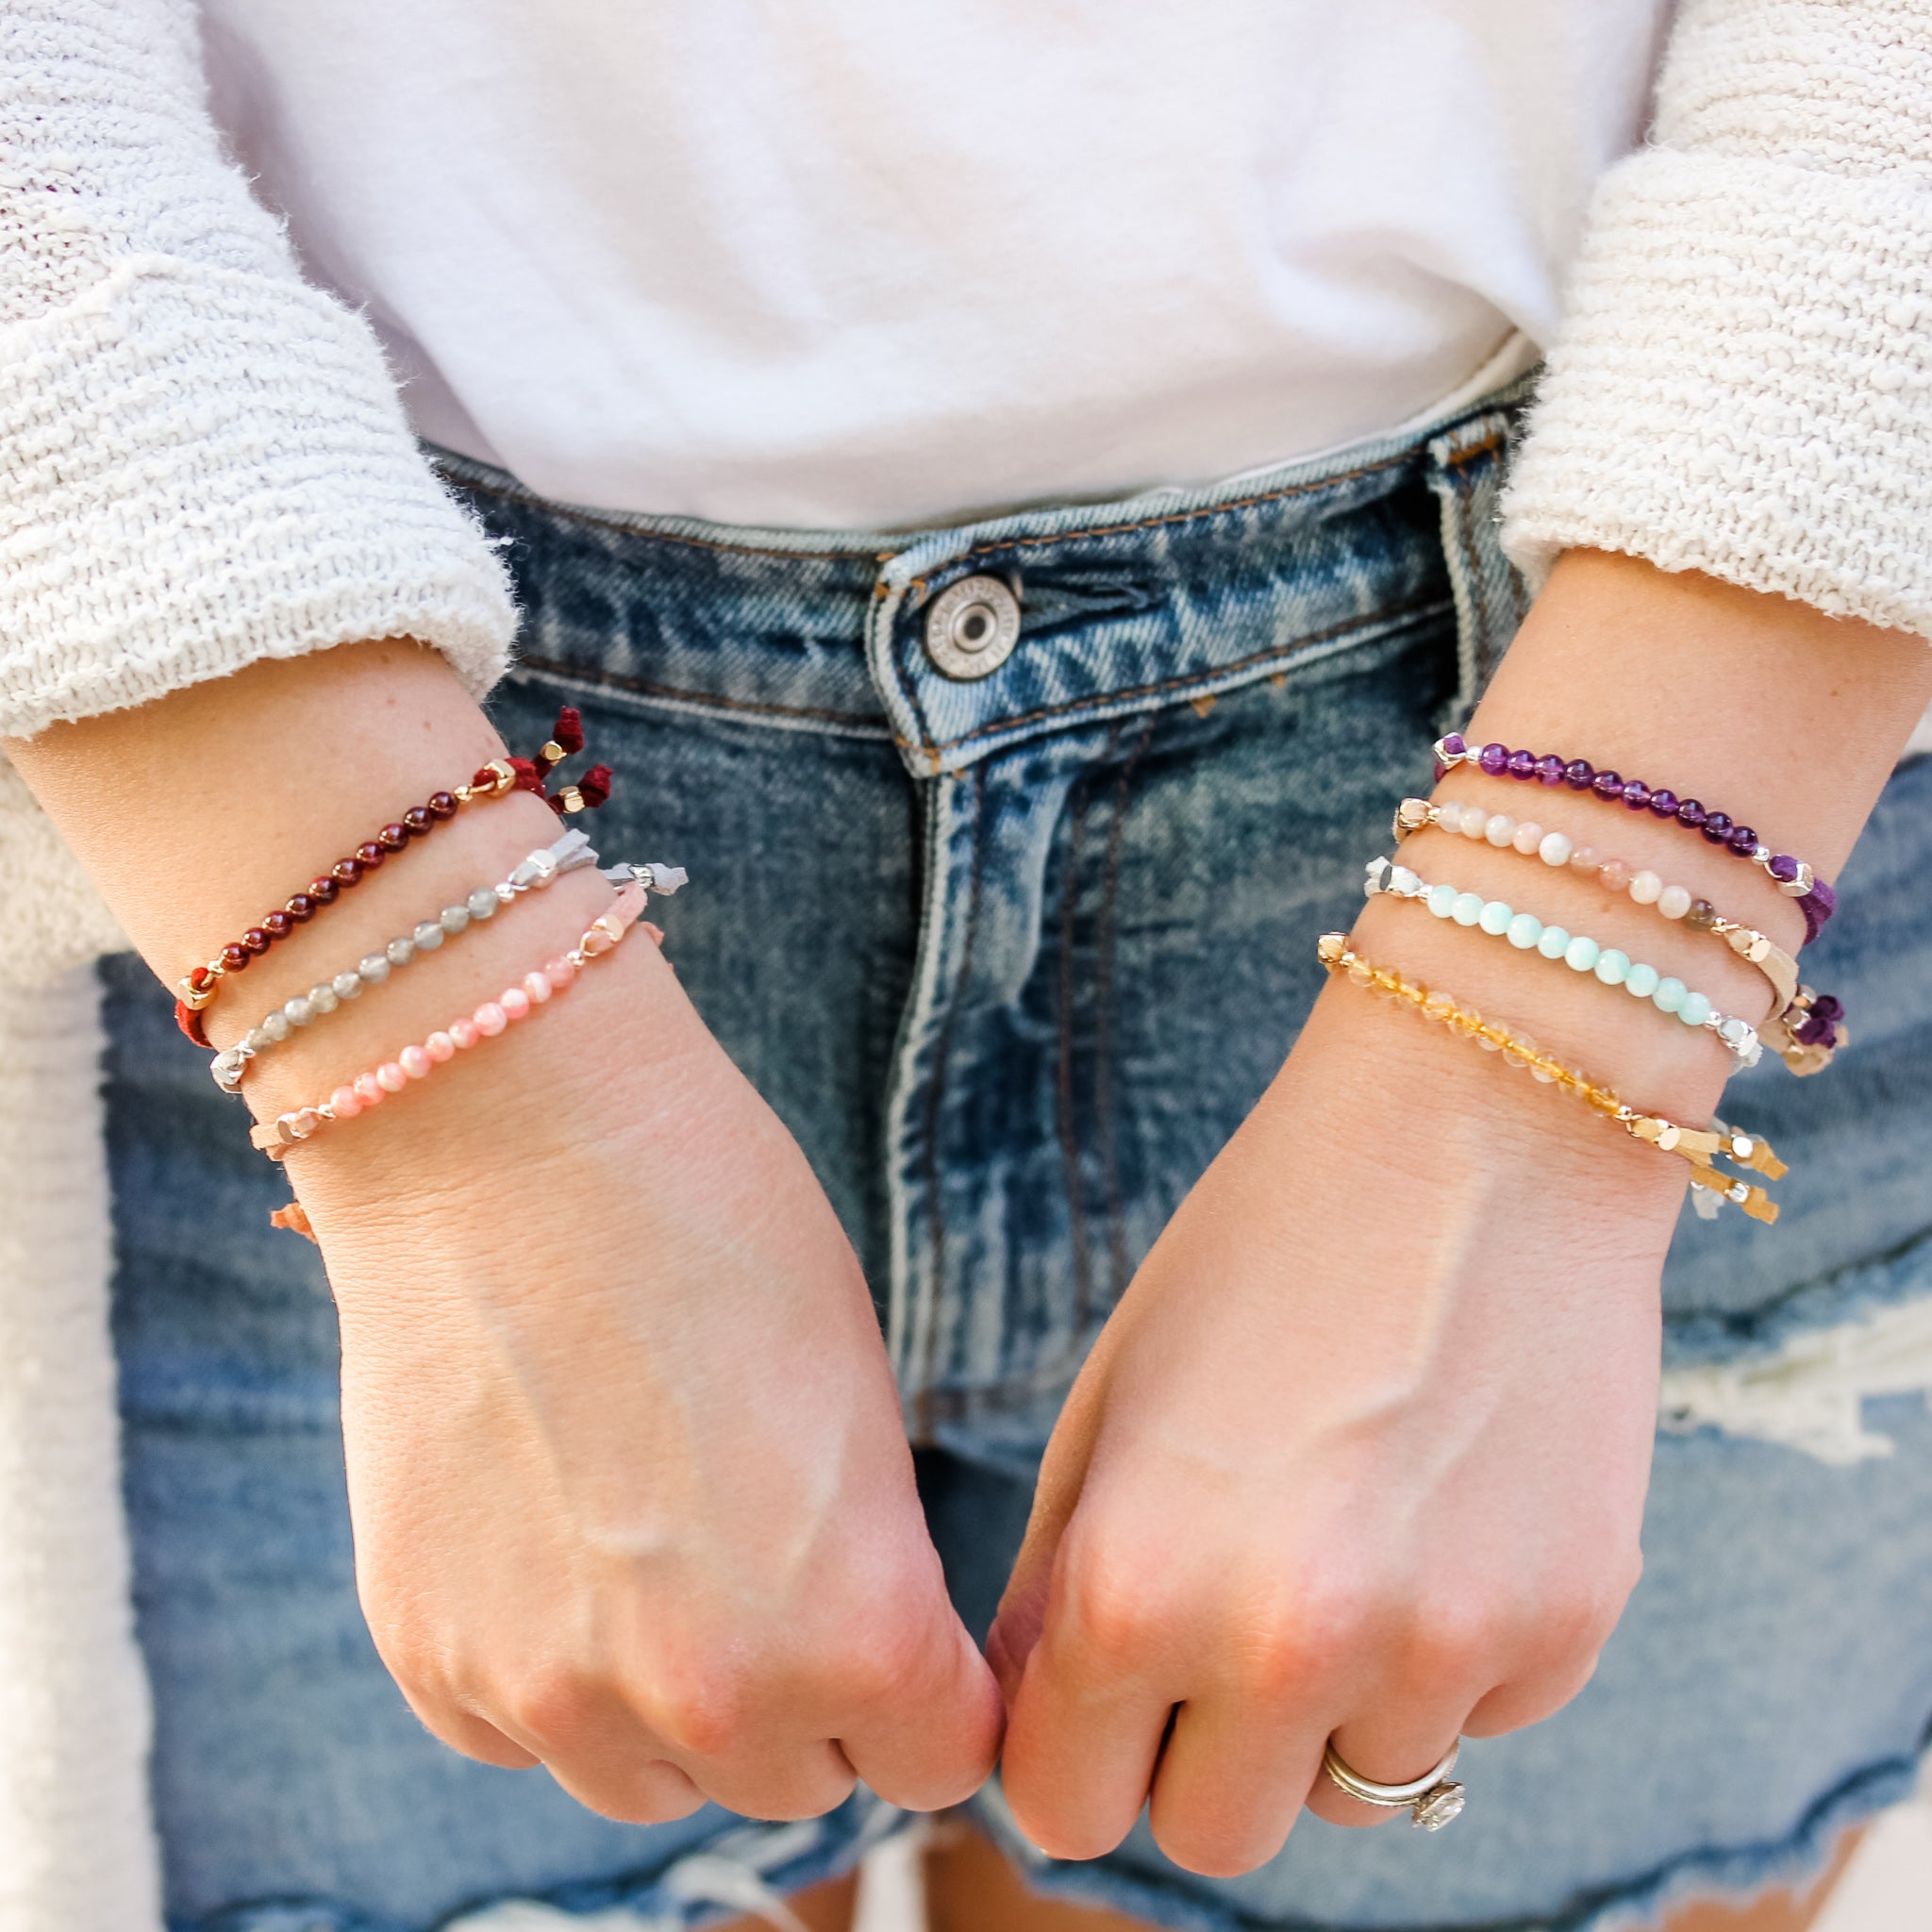 Crystal bead diffusing bracelet - Put on Love Designs